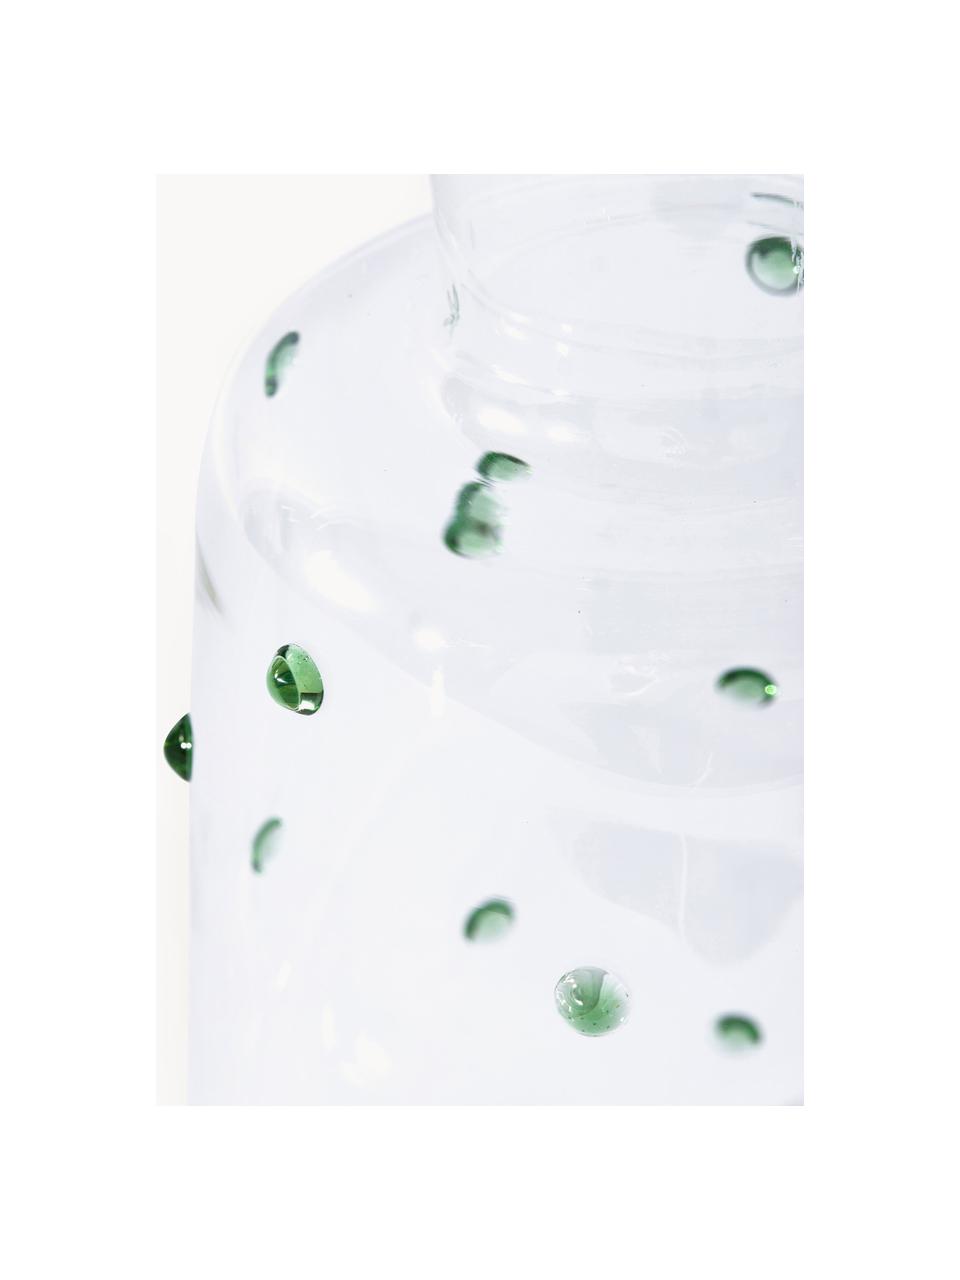 Carafe en verre borosilicate soufflé bouche Nob, 2 L, Verre borosilicate, soufflé bouche, Transparent, vert, 2 L